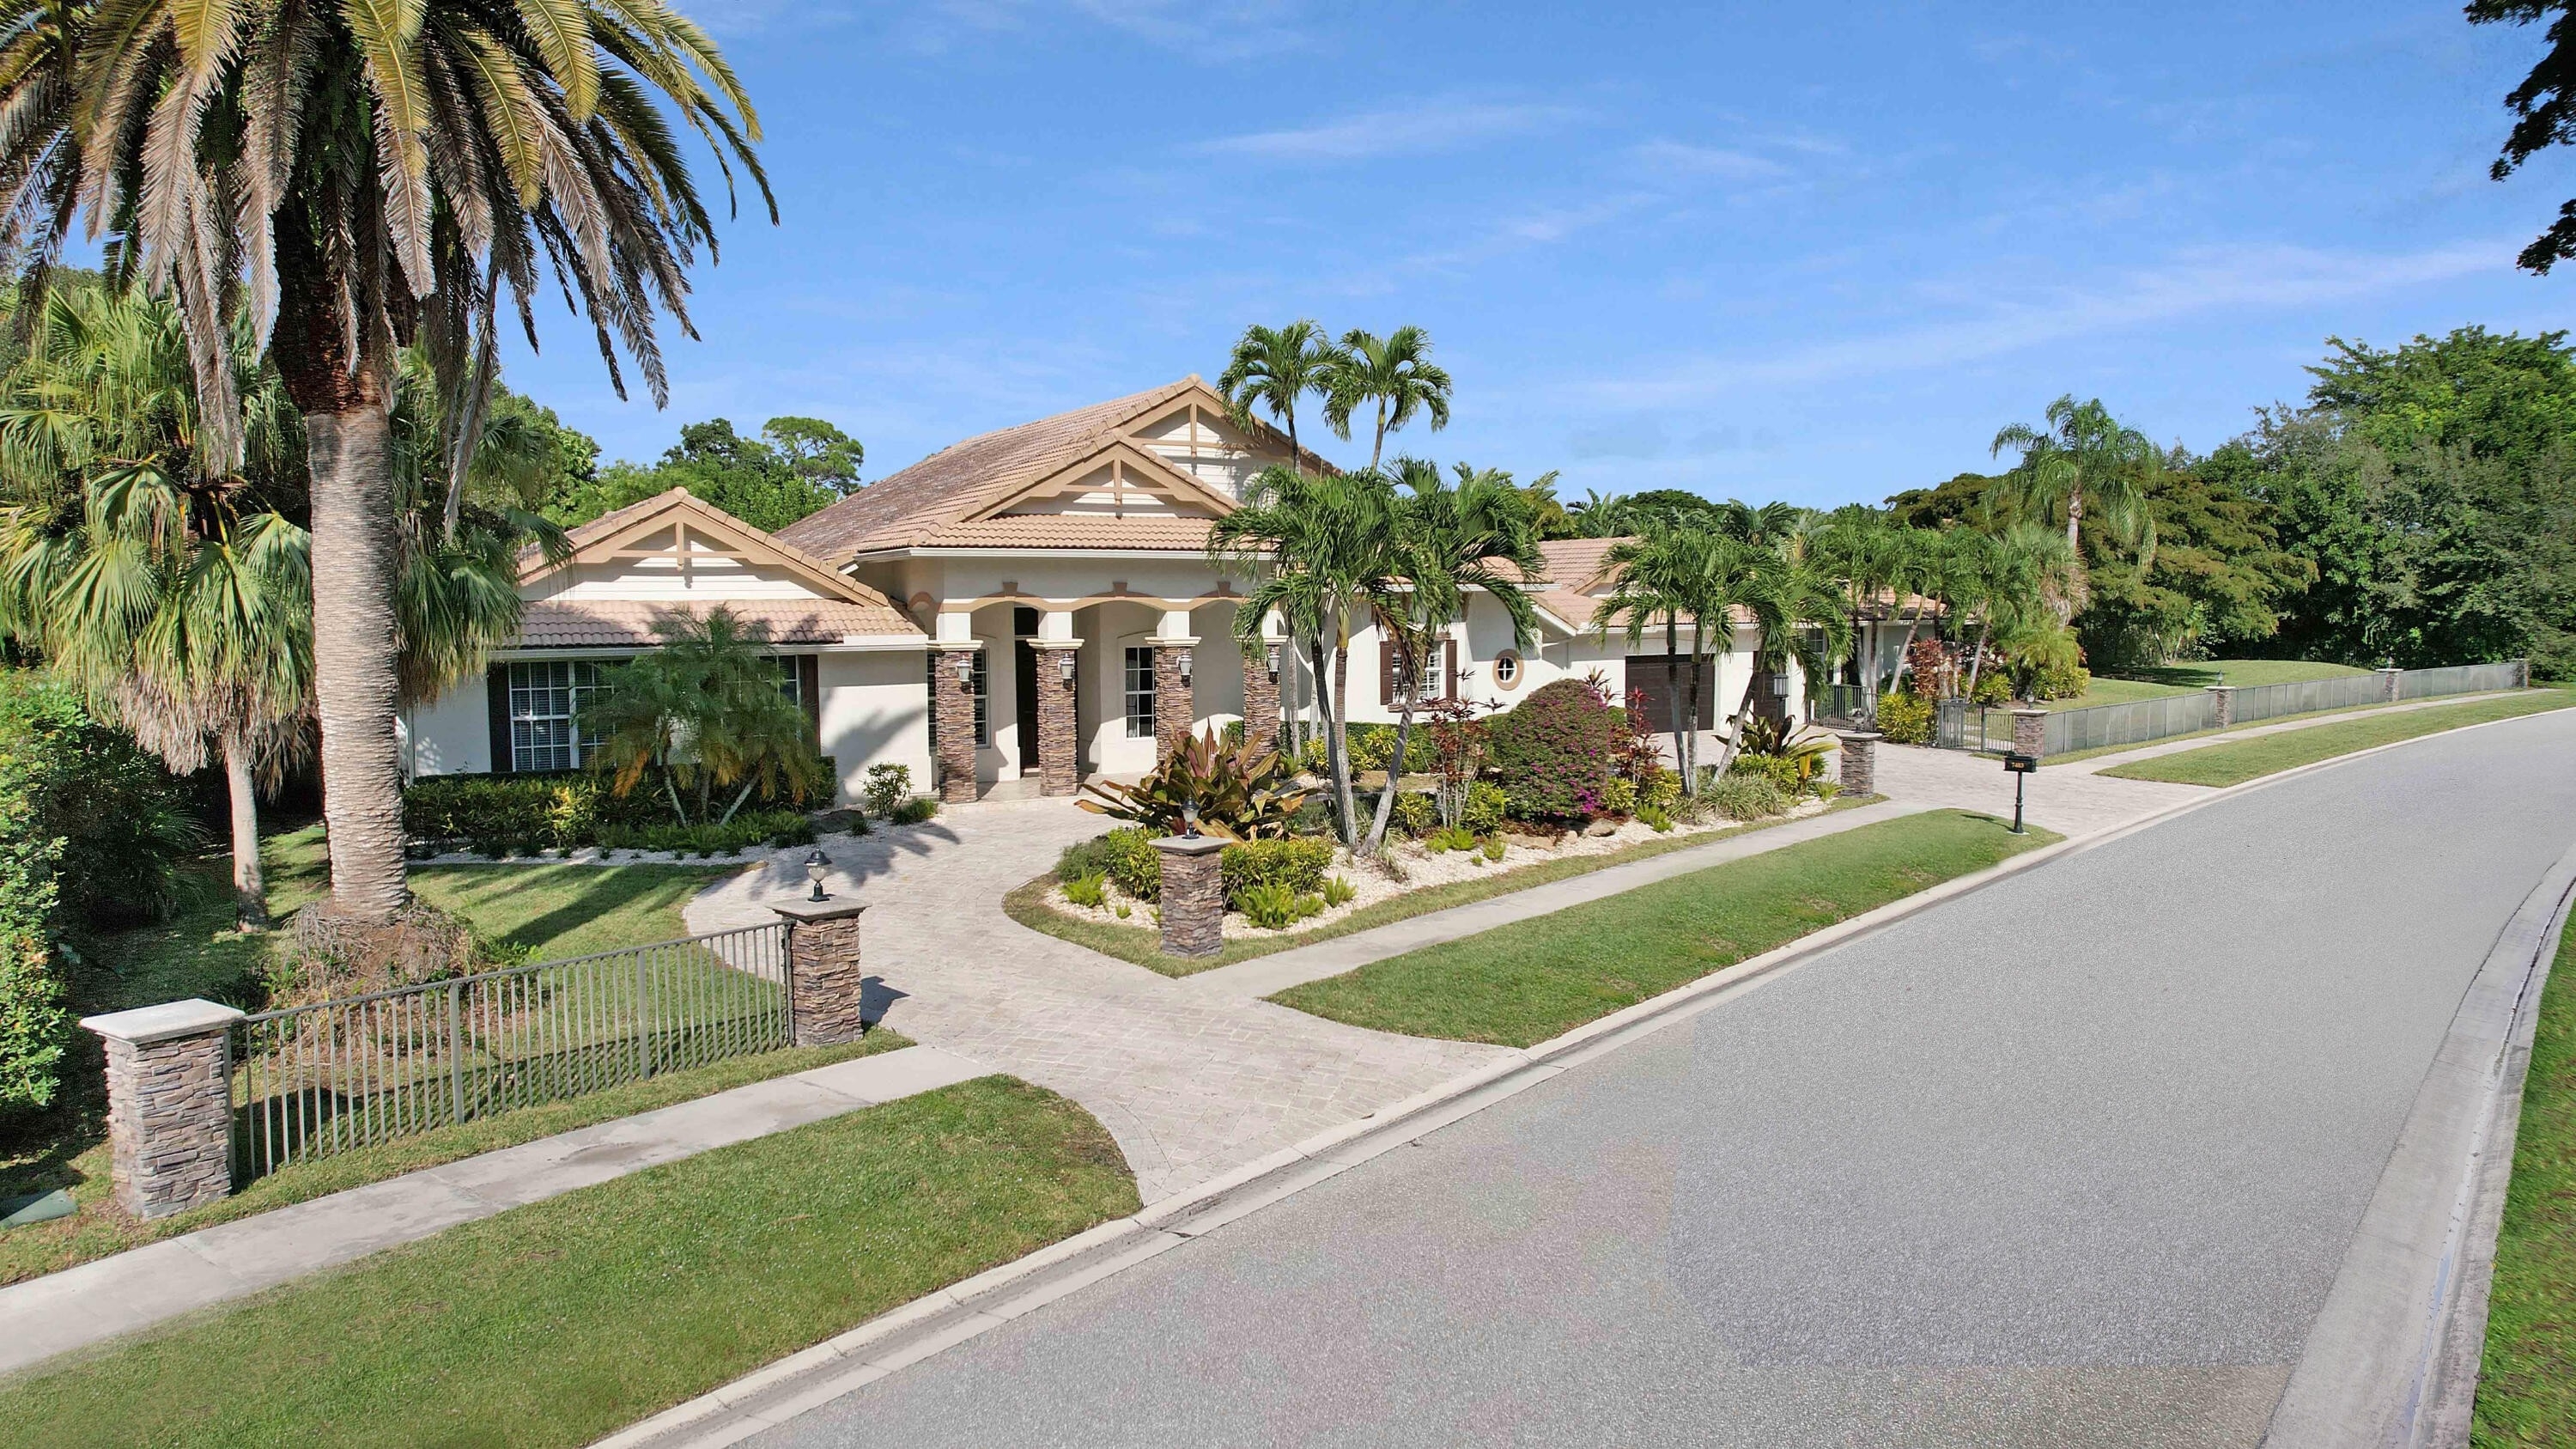 Single Family Home for Sale at Boca Grove Plantation, Boca Raton, FL 33433